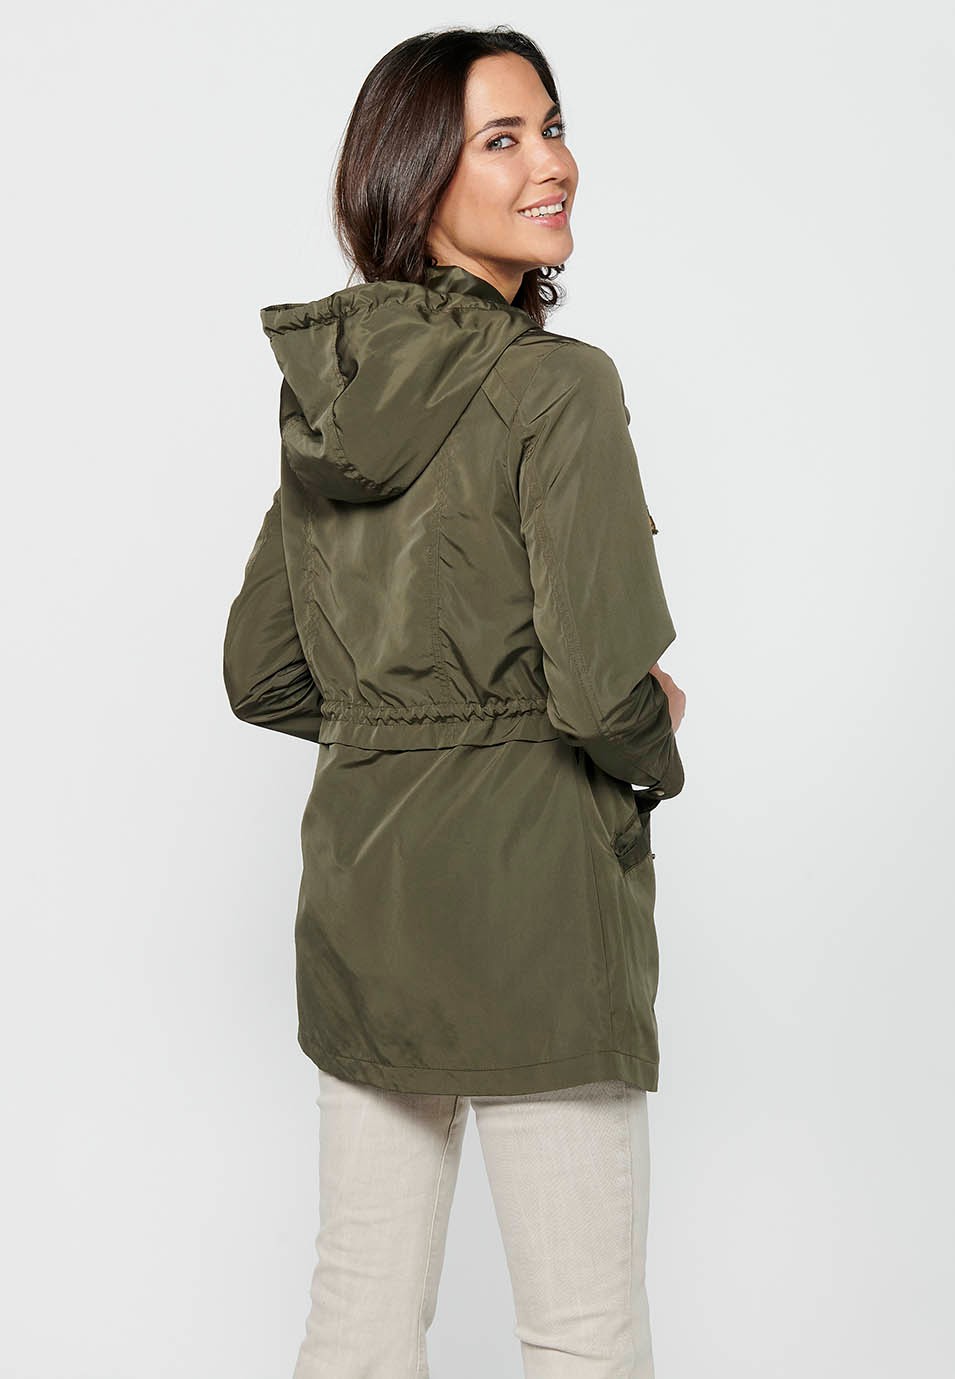 Women's Khaki Long Sleeve Zip Front Hooded Collar Parka Jacket with Pockets 6